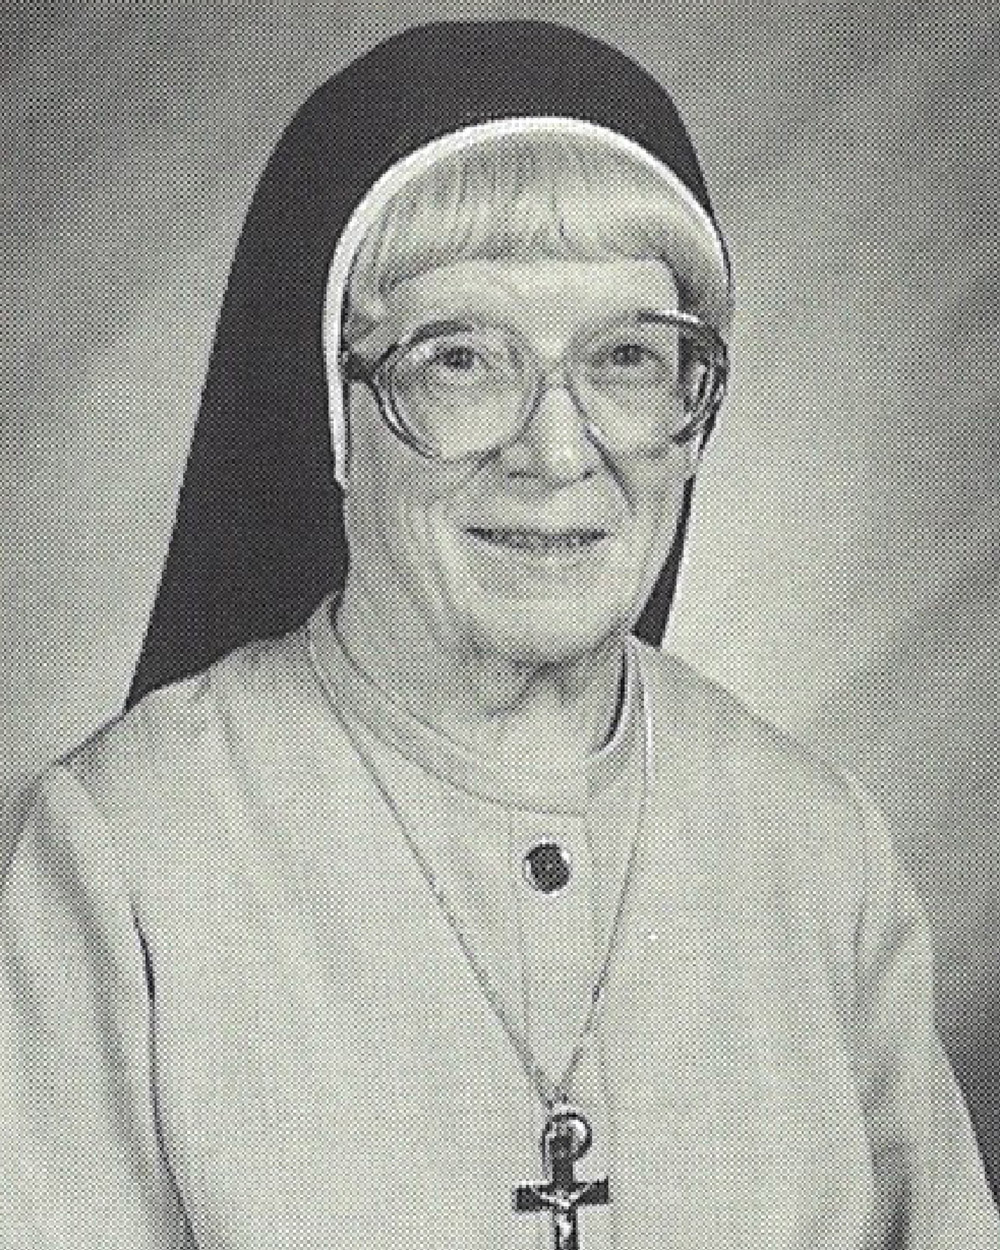 Sister-M.-Simplicia-Wishaw-OSF-1916-2007